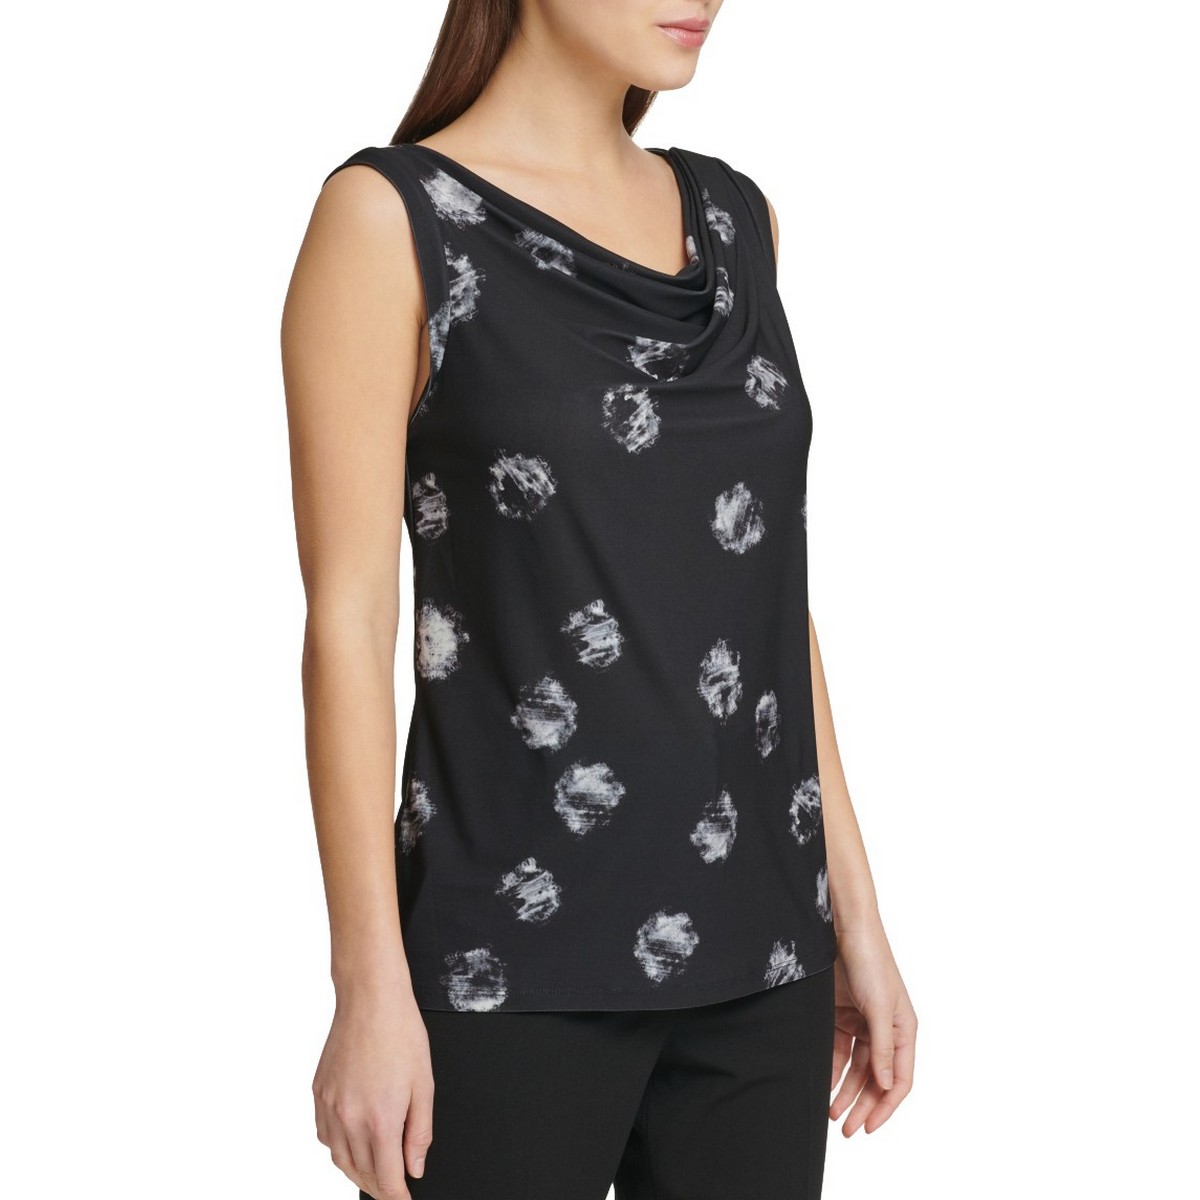 DKNY NEW Women's Black Sleeveless Printed Cowl-neck Blouse Shirt Top L TEDO